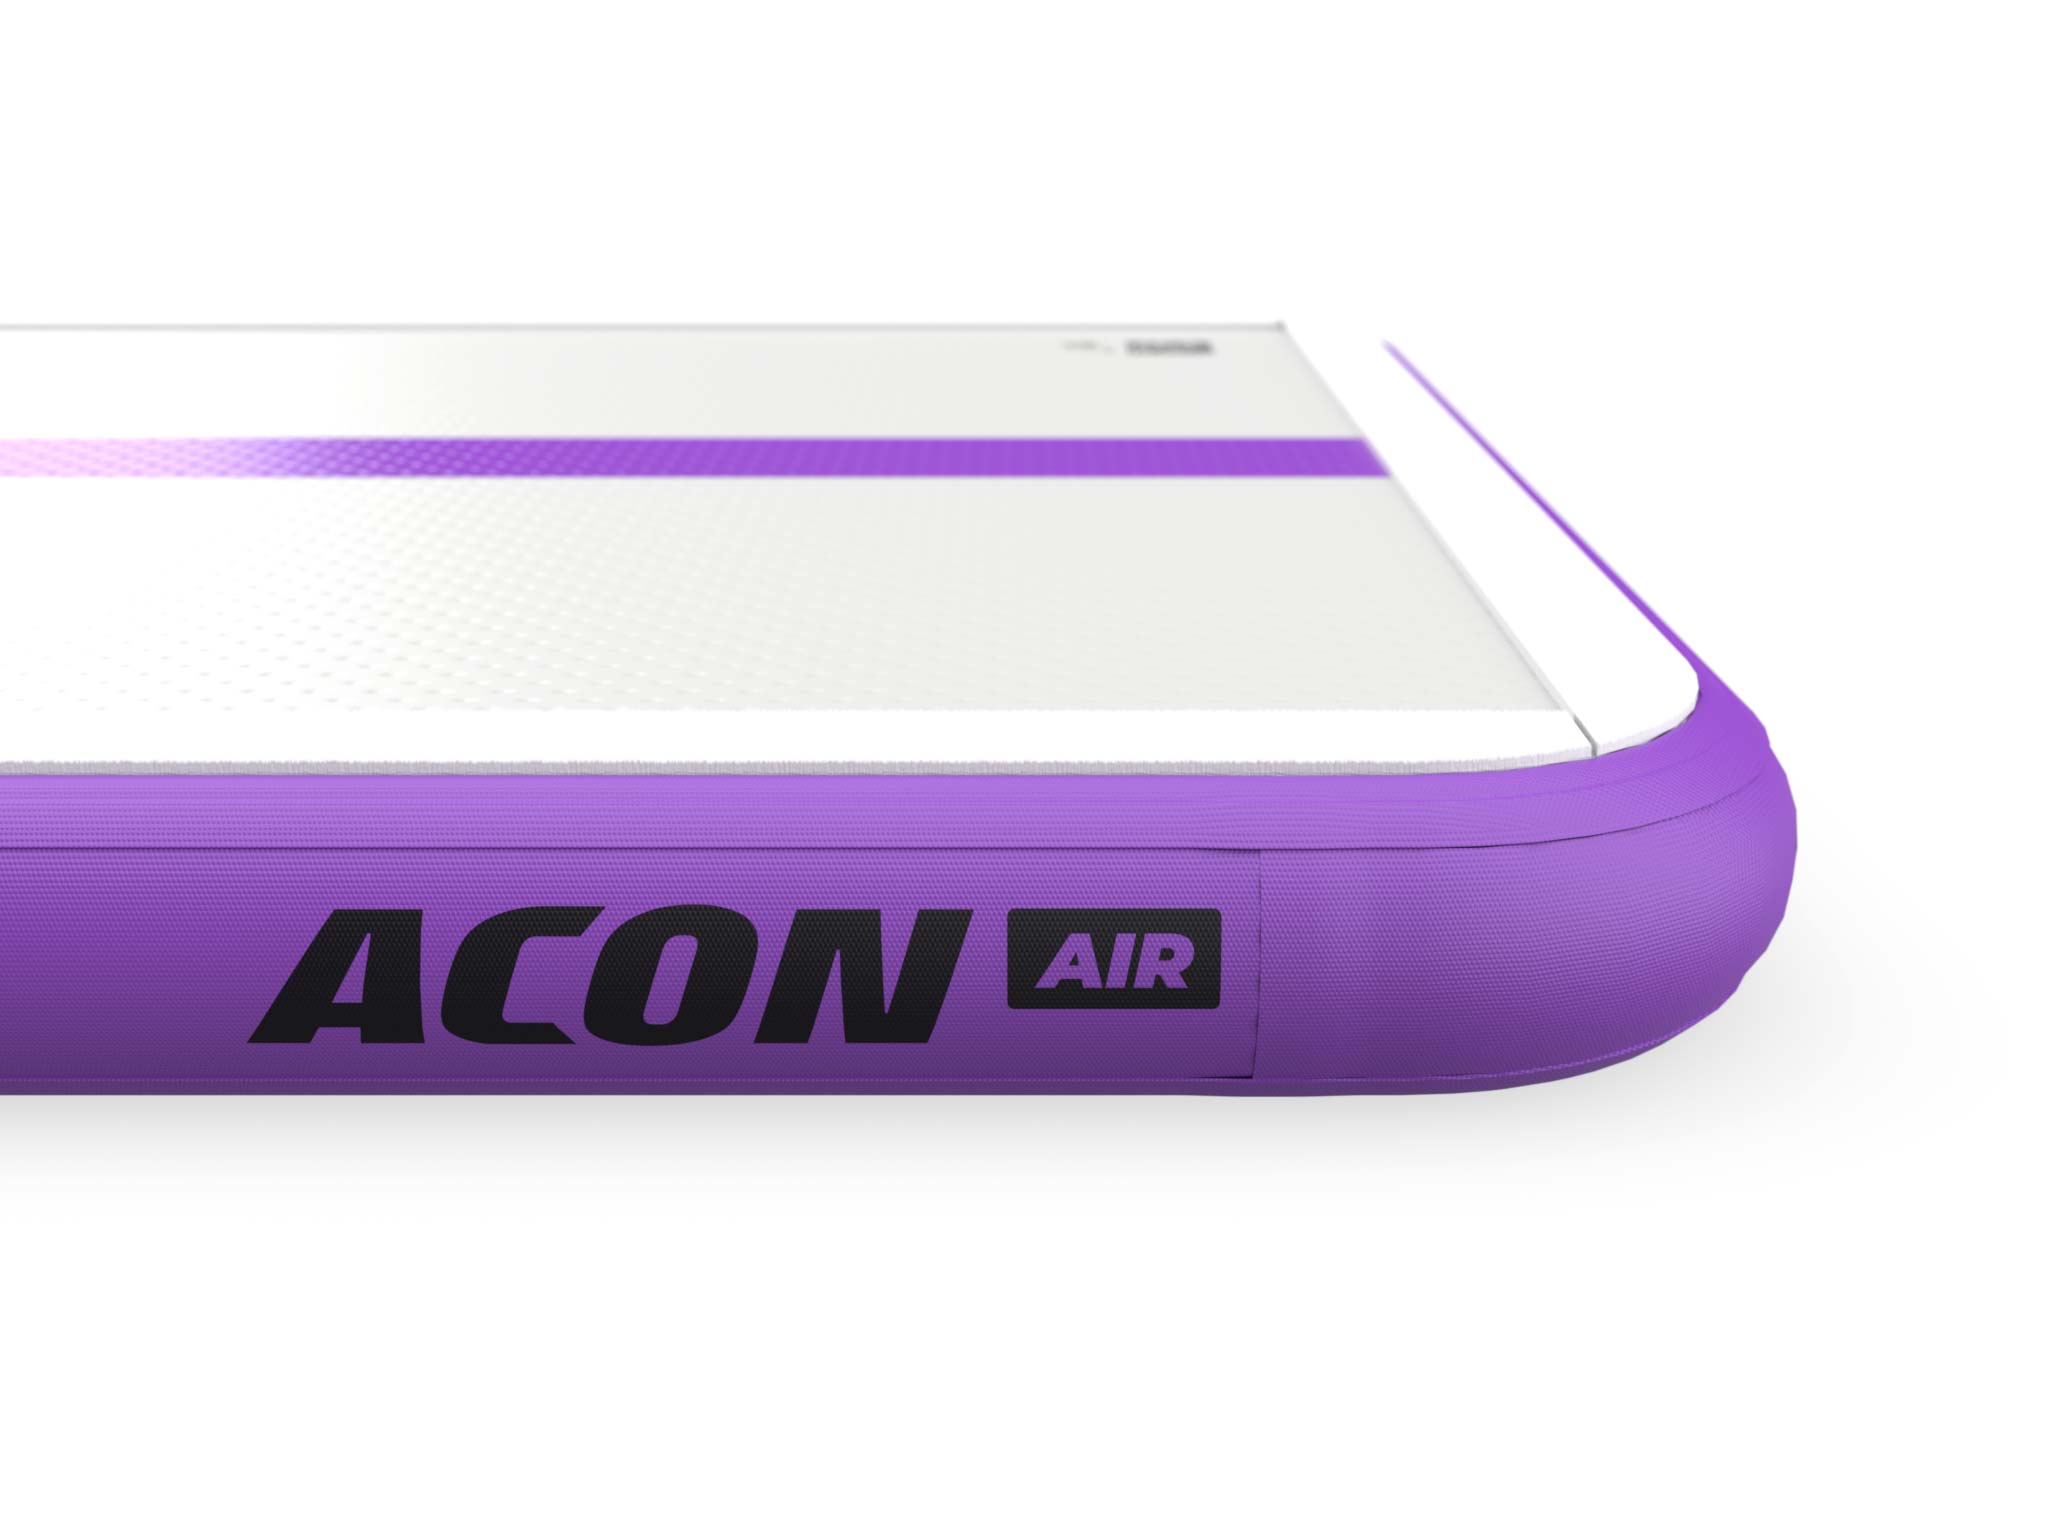 Acon airtrack tumbling mat 10ft light purple edition - details